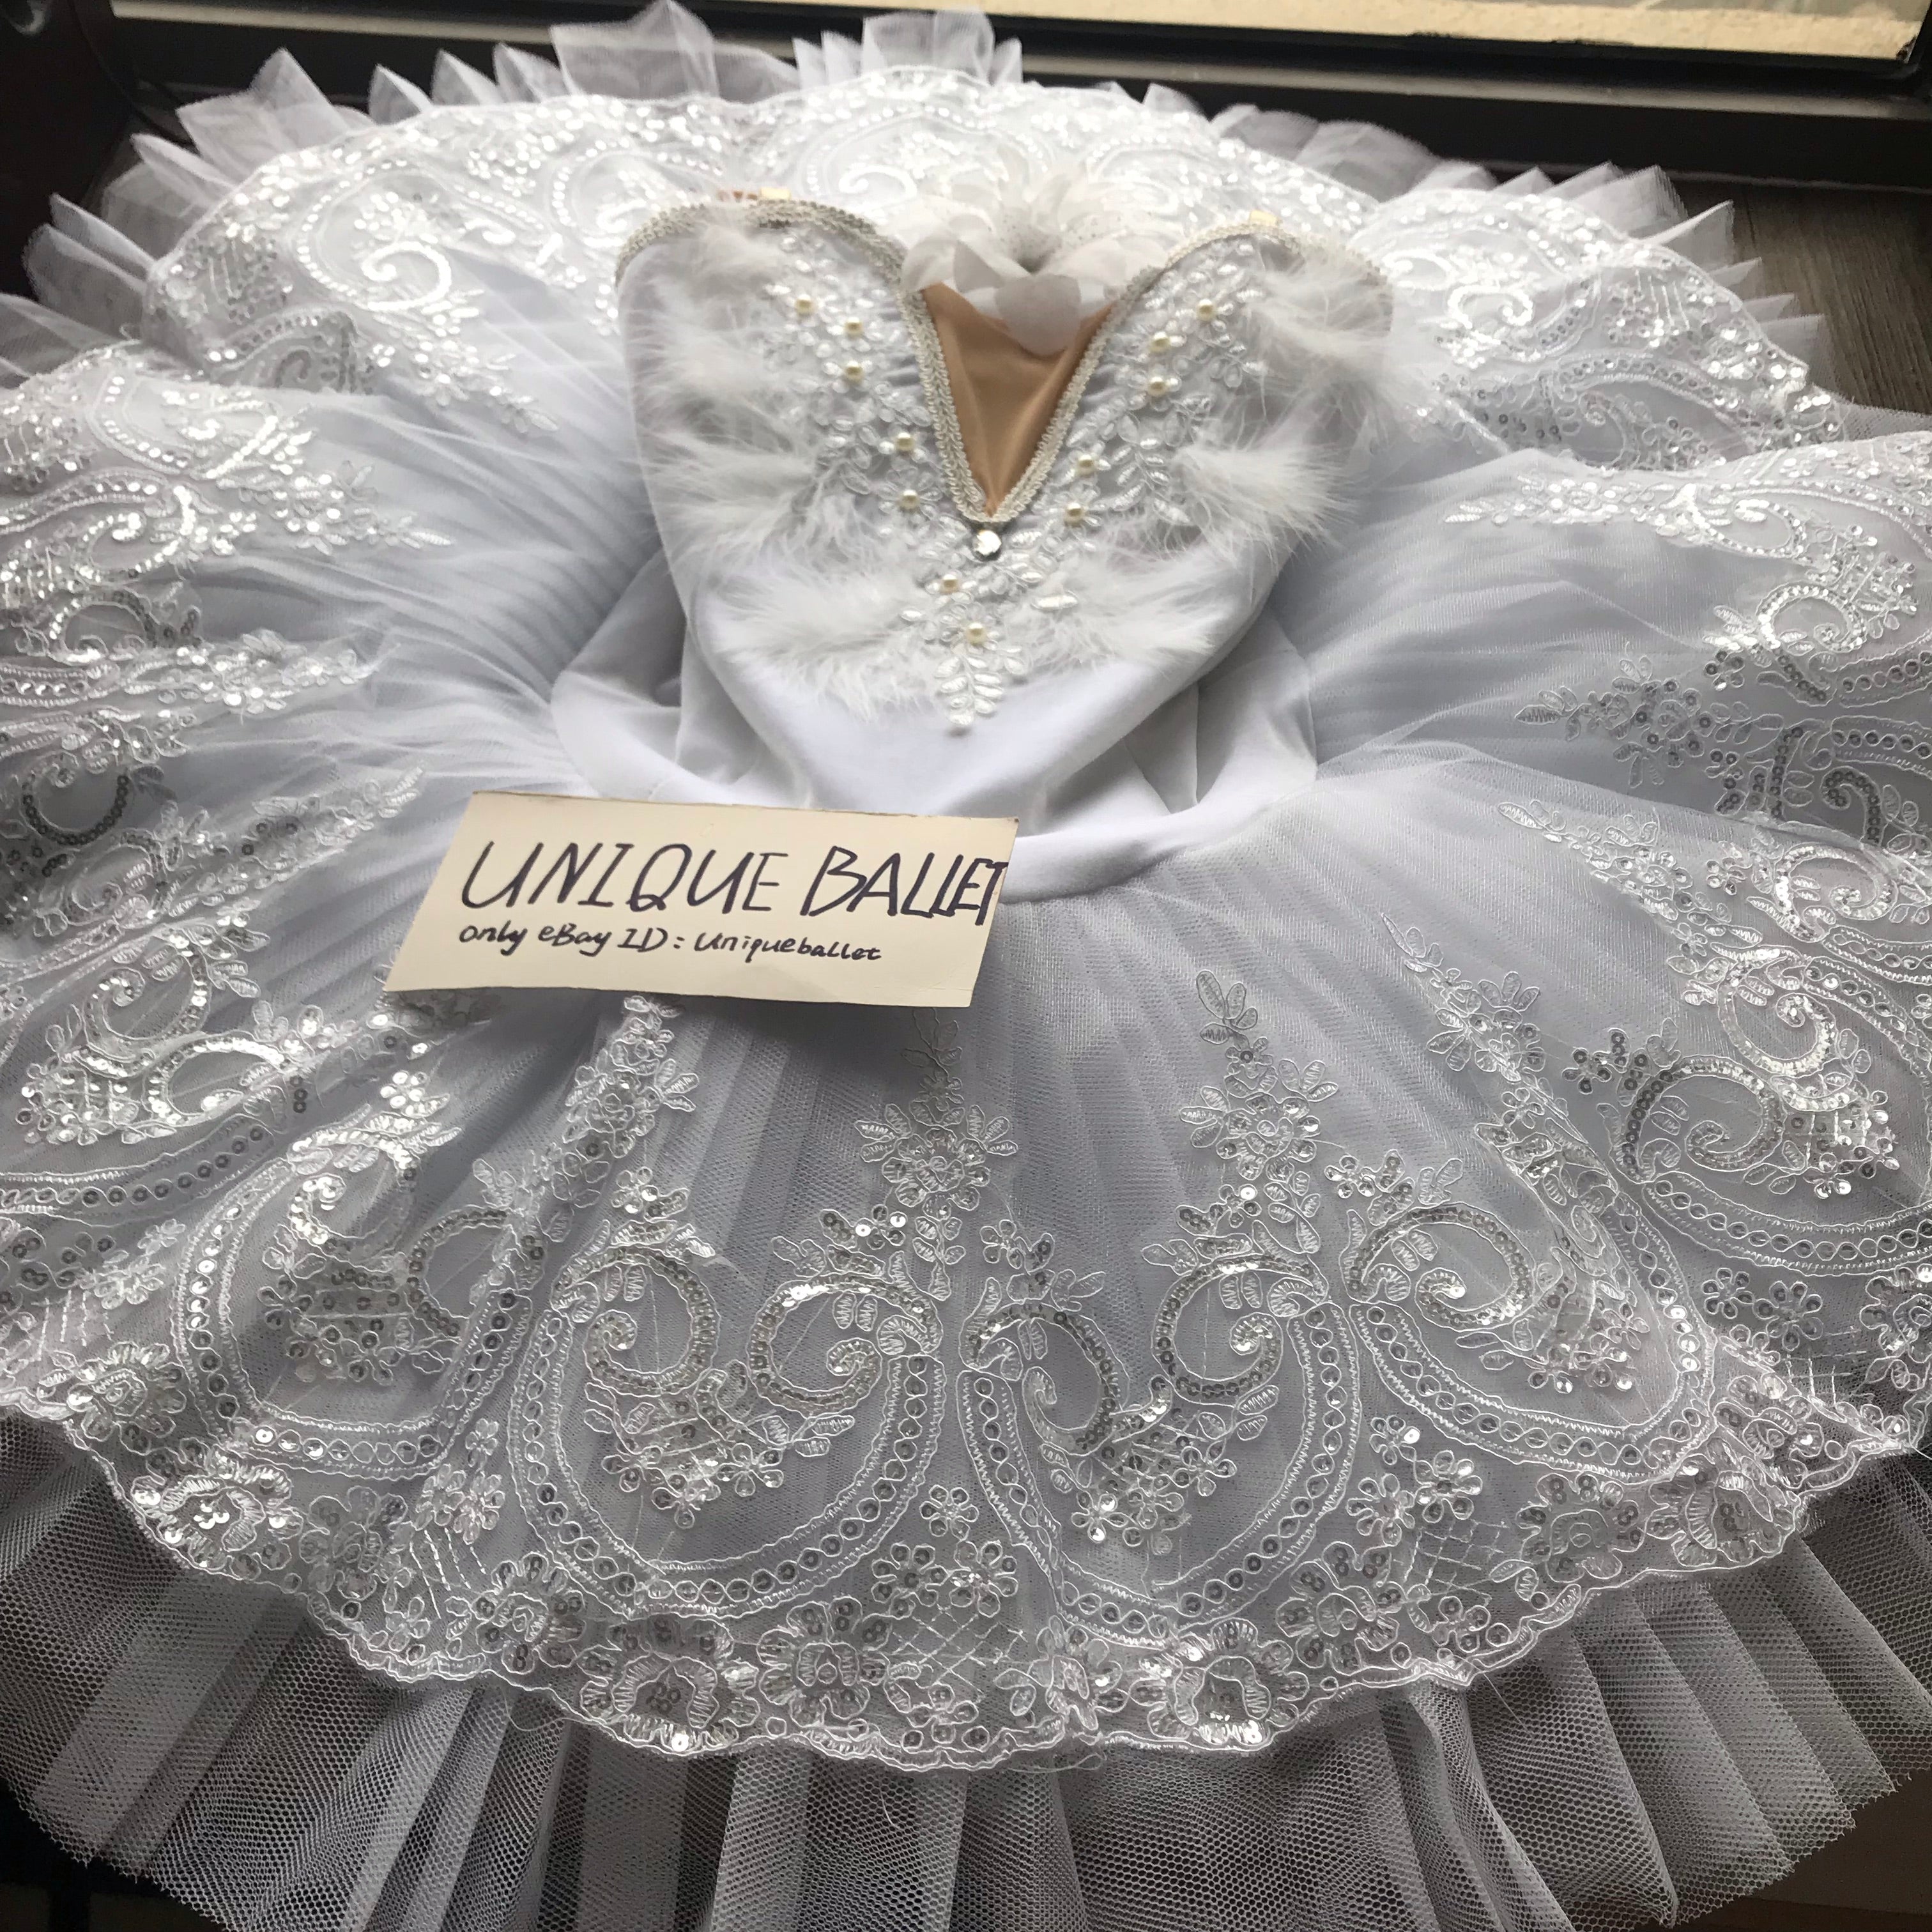 White Swan Lake Classic Ballet TuTu Costume (Unprofessional)-5CWHTWHTCLA